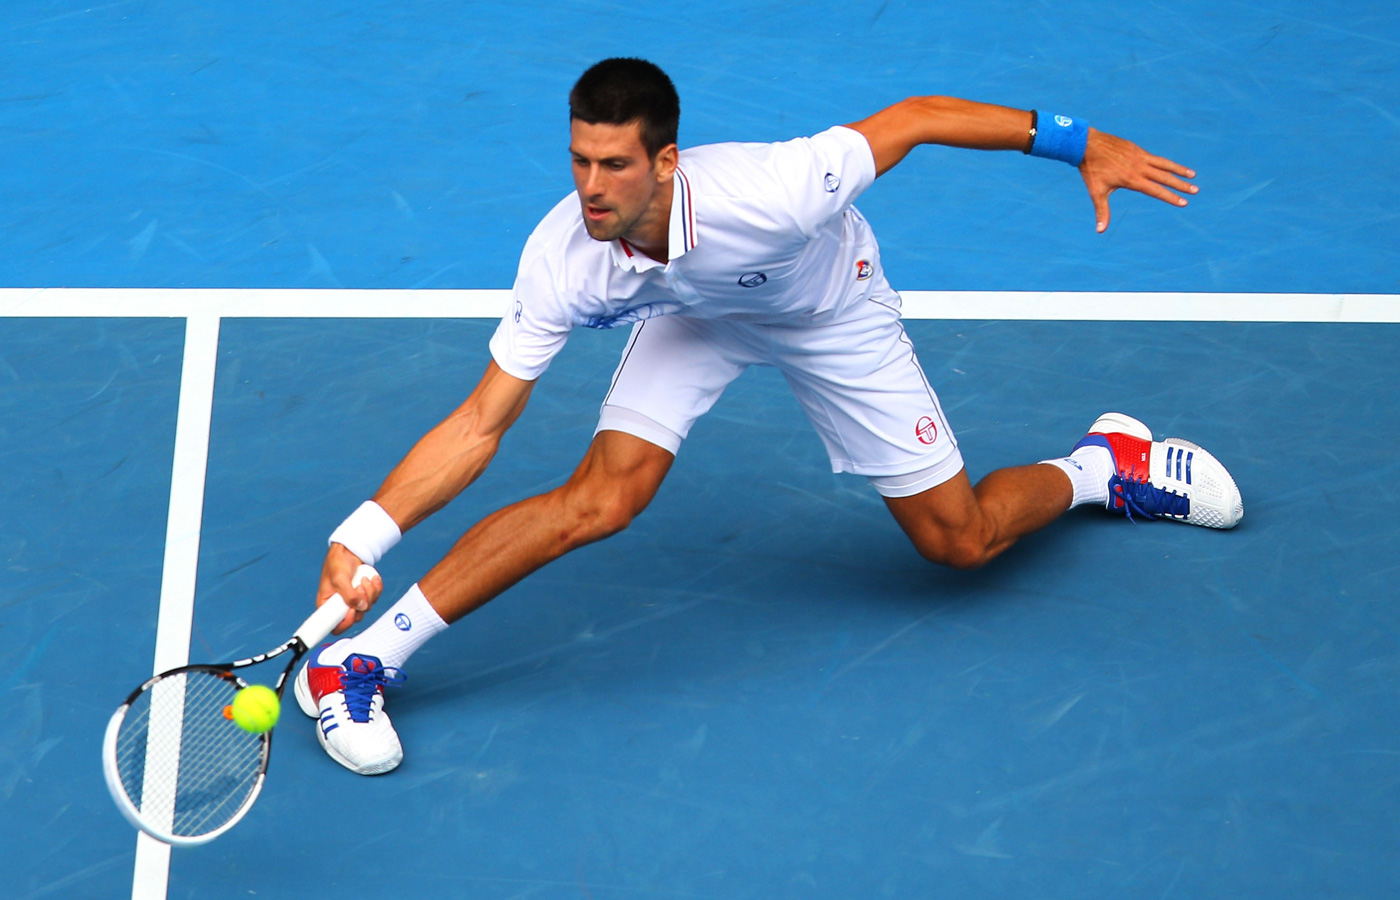 ... Wallpapers: Novak Djokovic Australian Open 2012 Best Hd Wallpapers